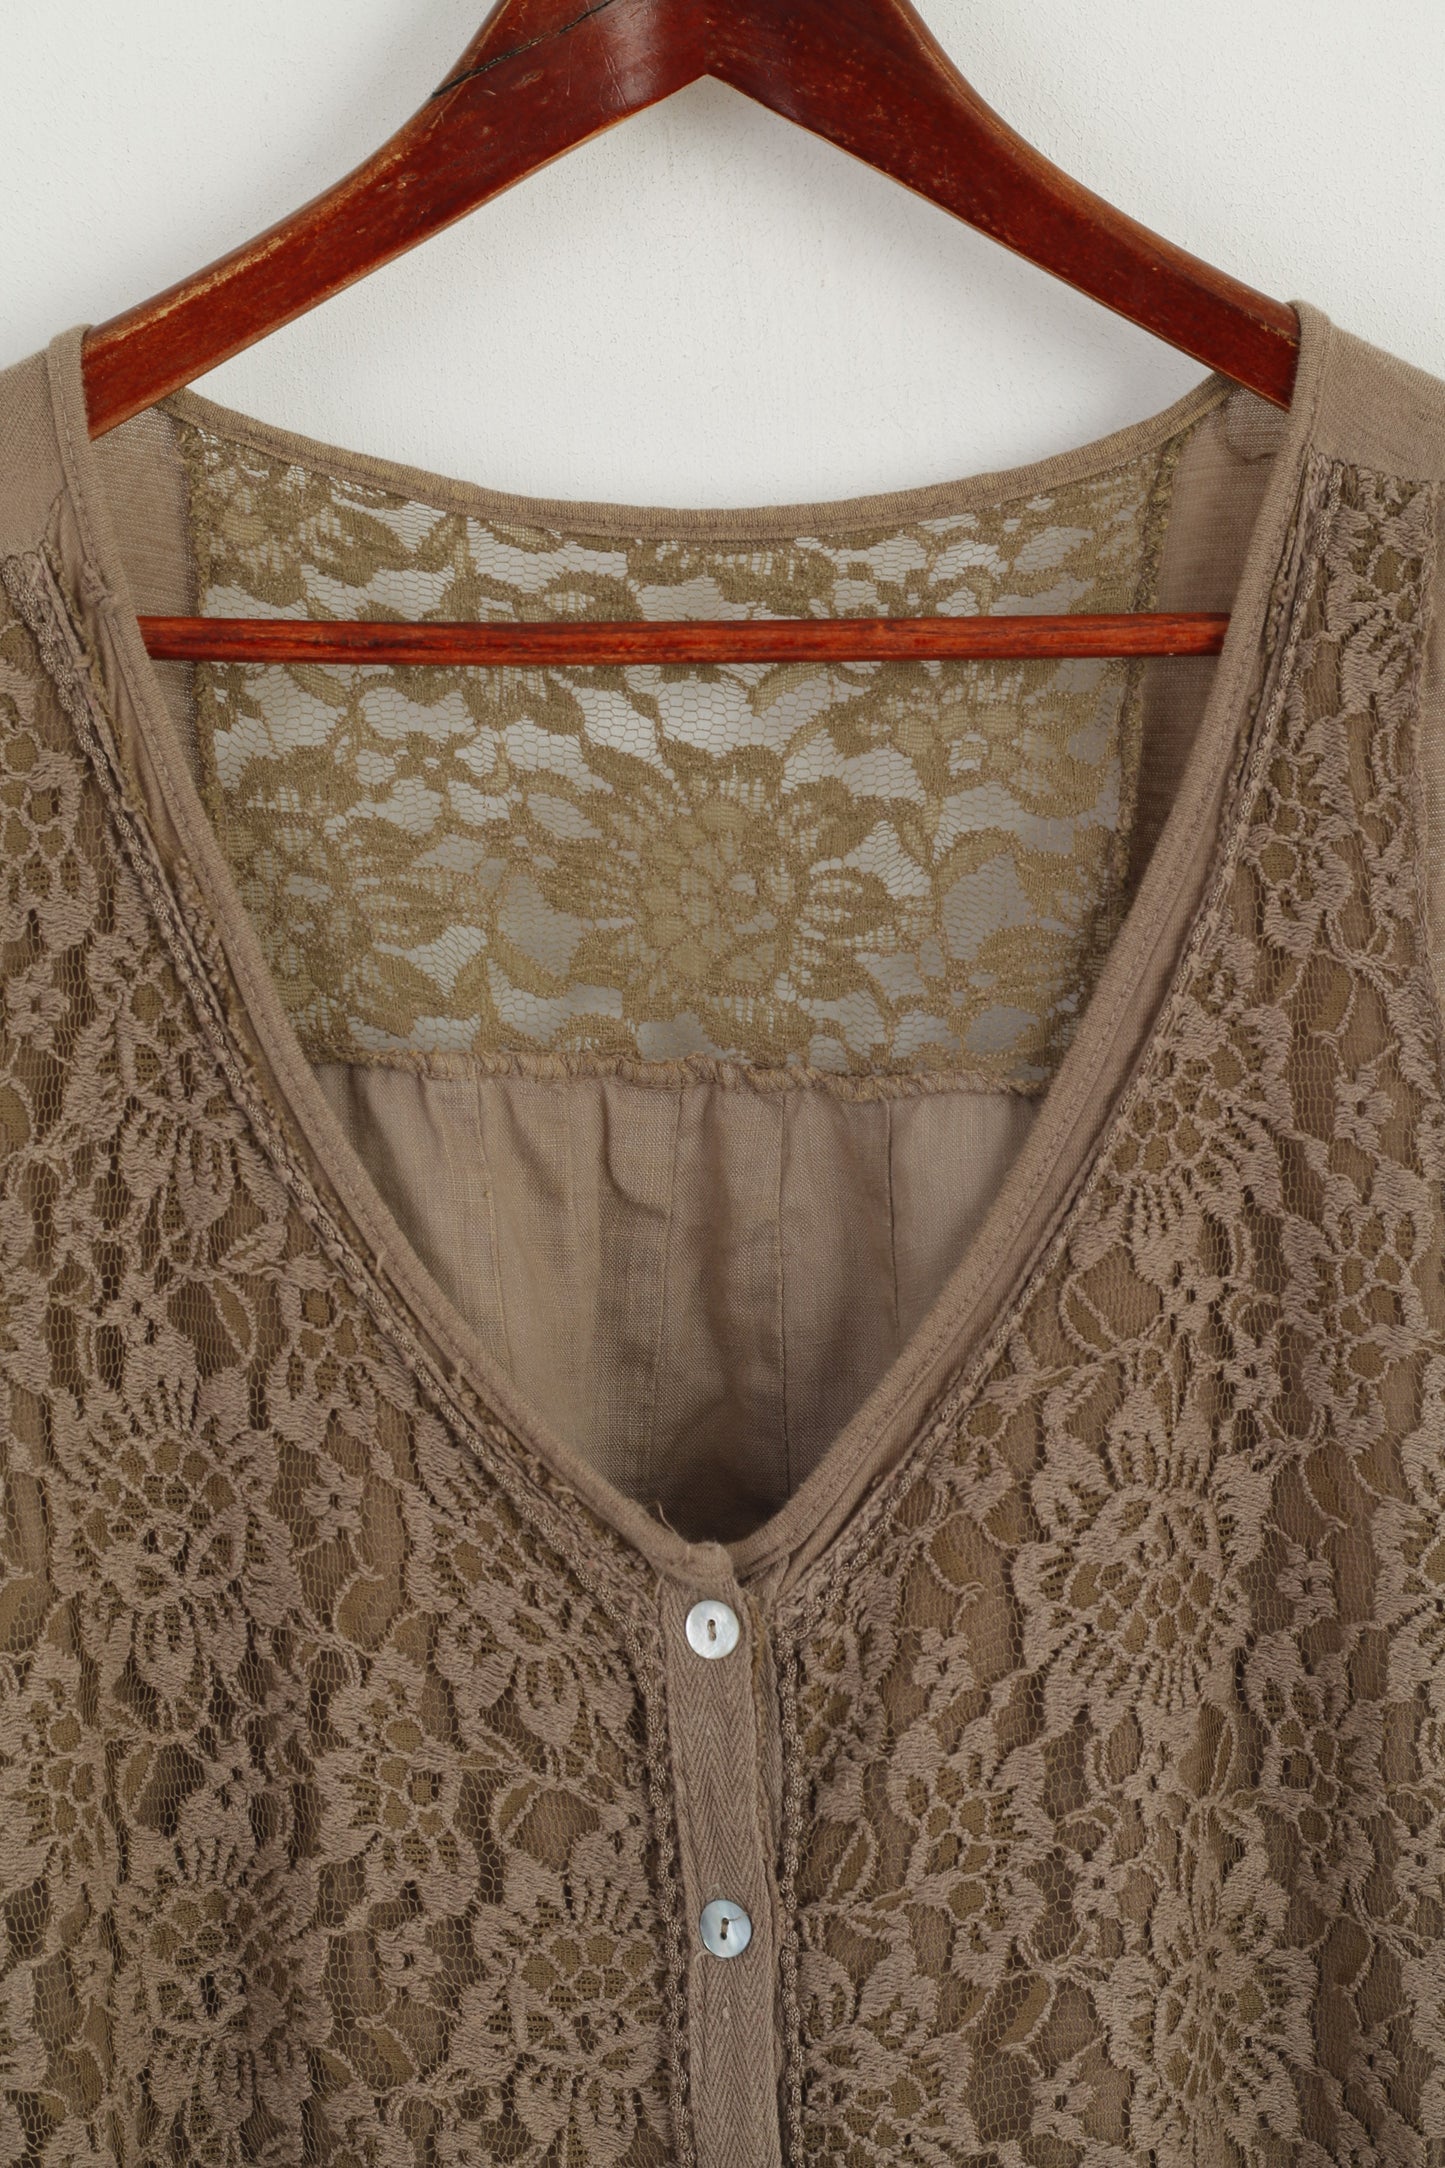 Made in Italy Women XXXL (XXL) Shirt Brown 100% Linen Lace Sleeveless Tunic Top